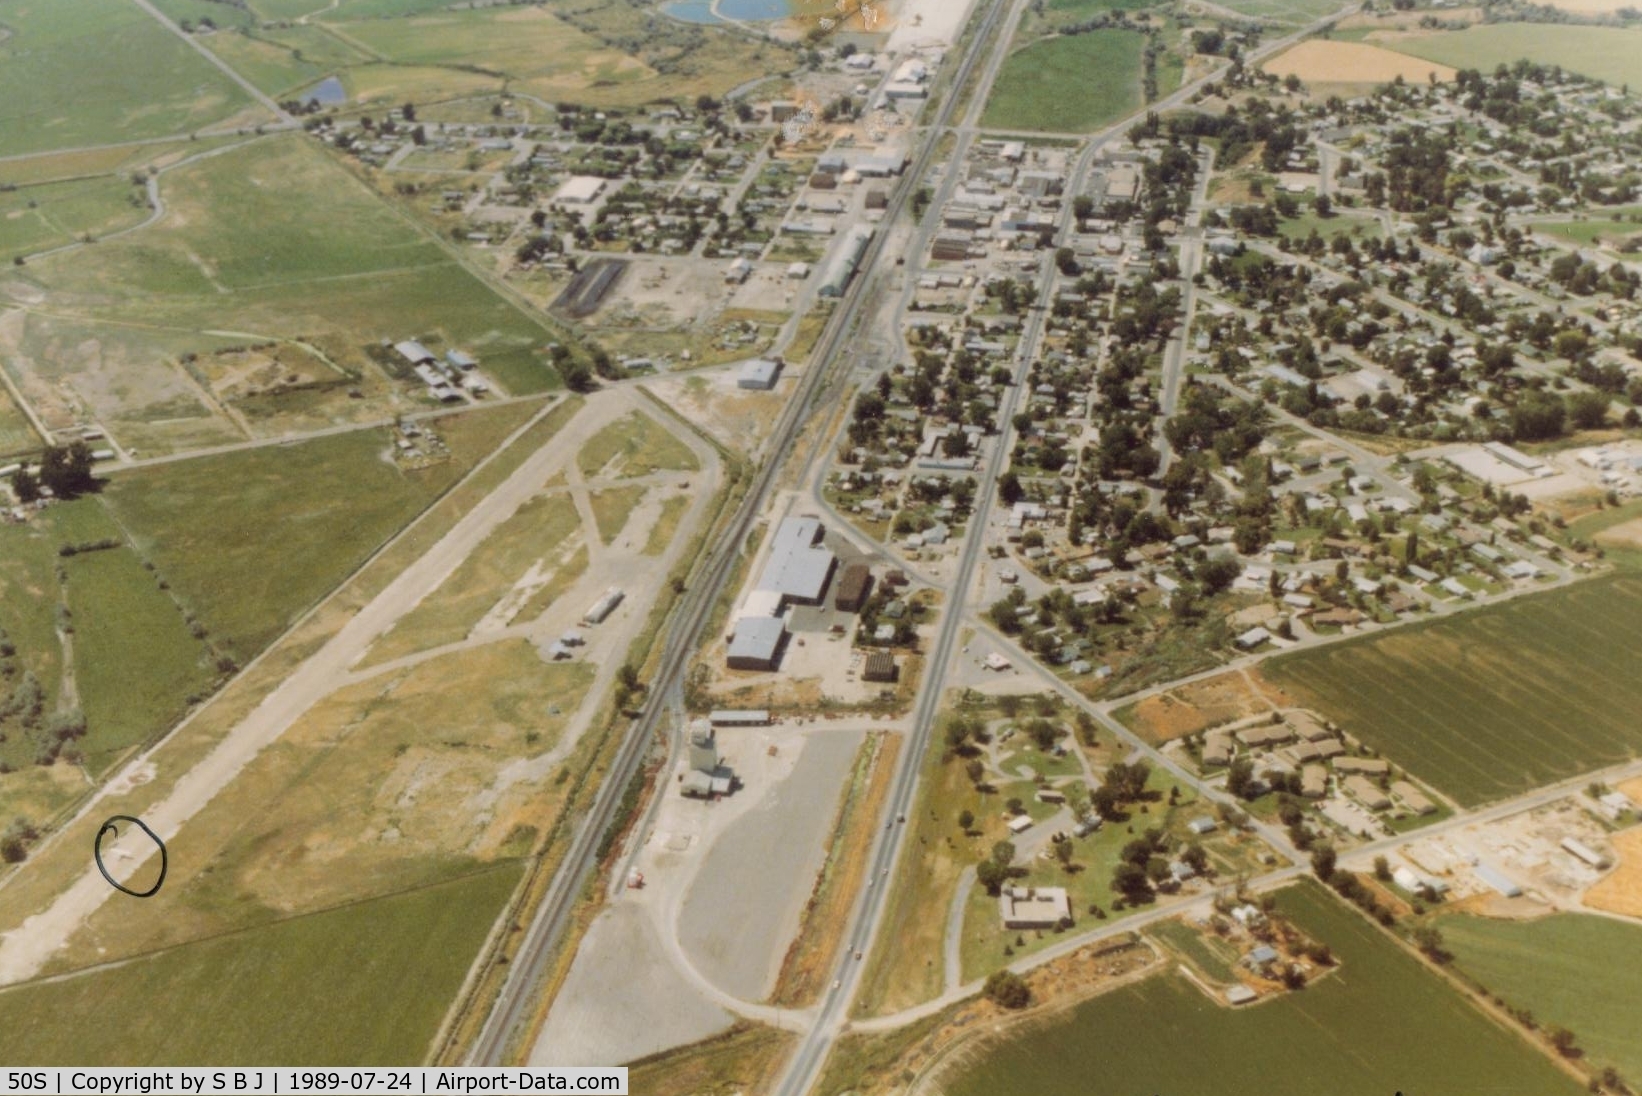 Parma Airport (50S) - Nice dirt runway back in 1989. Aeronca 68E can be seen landing.